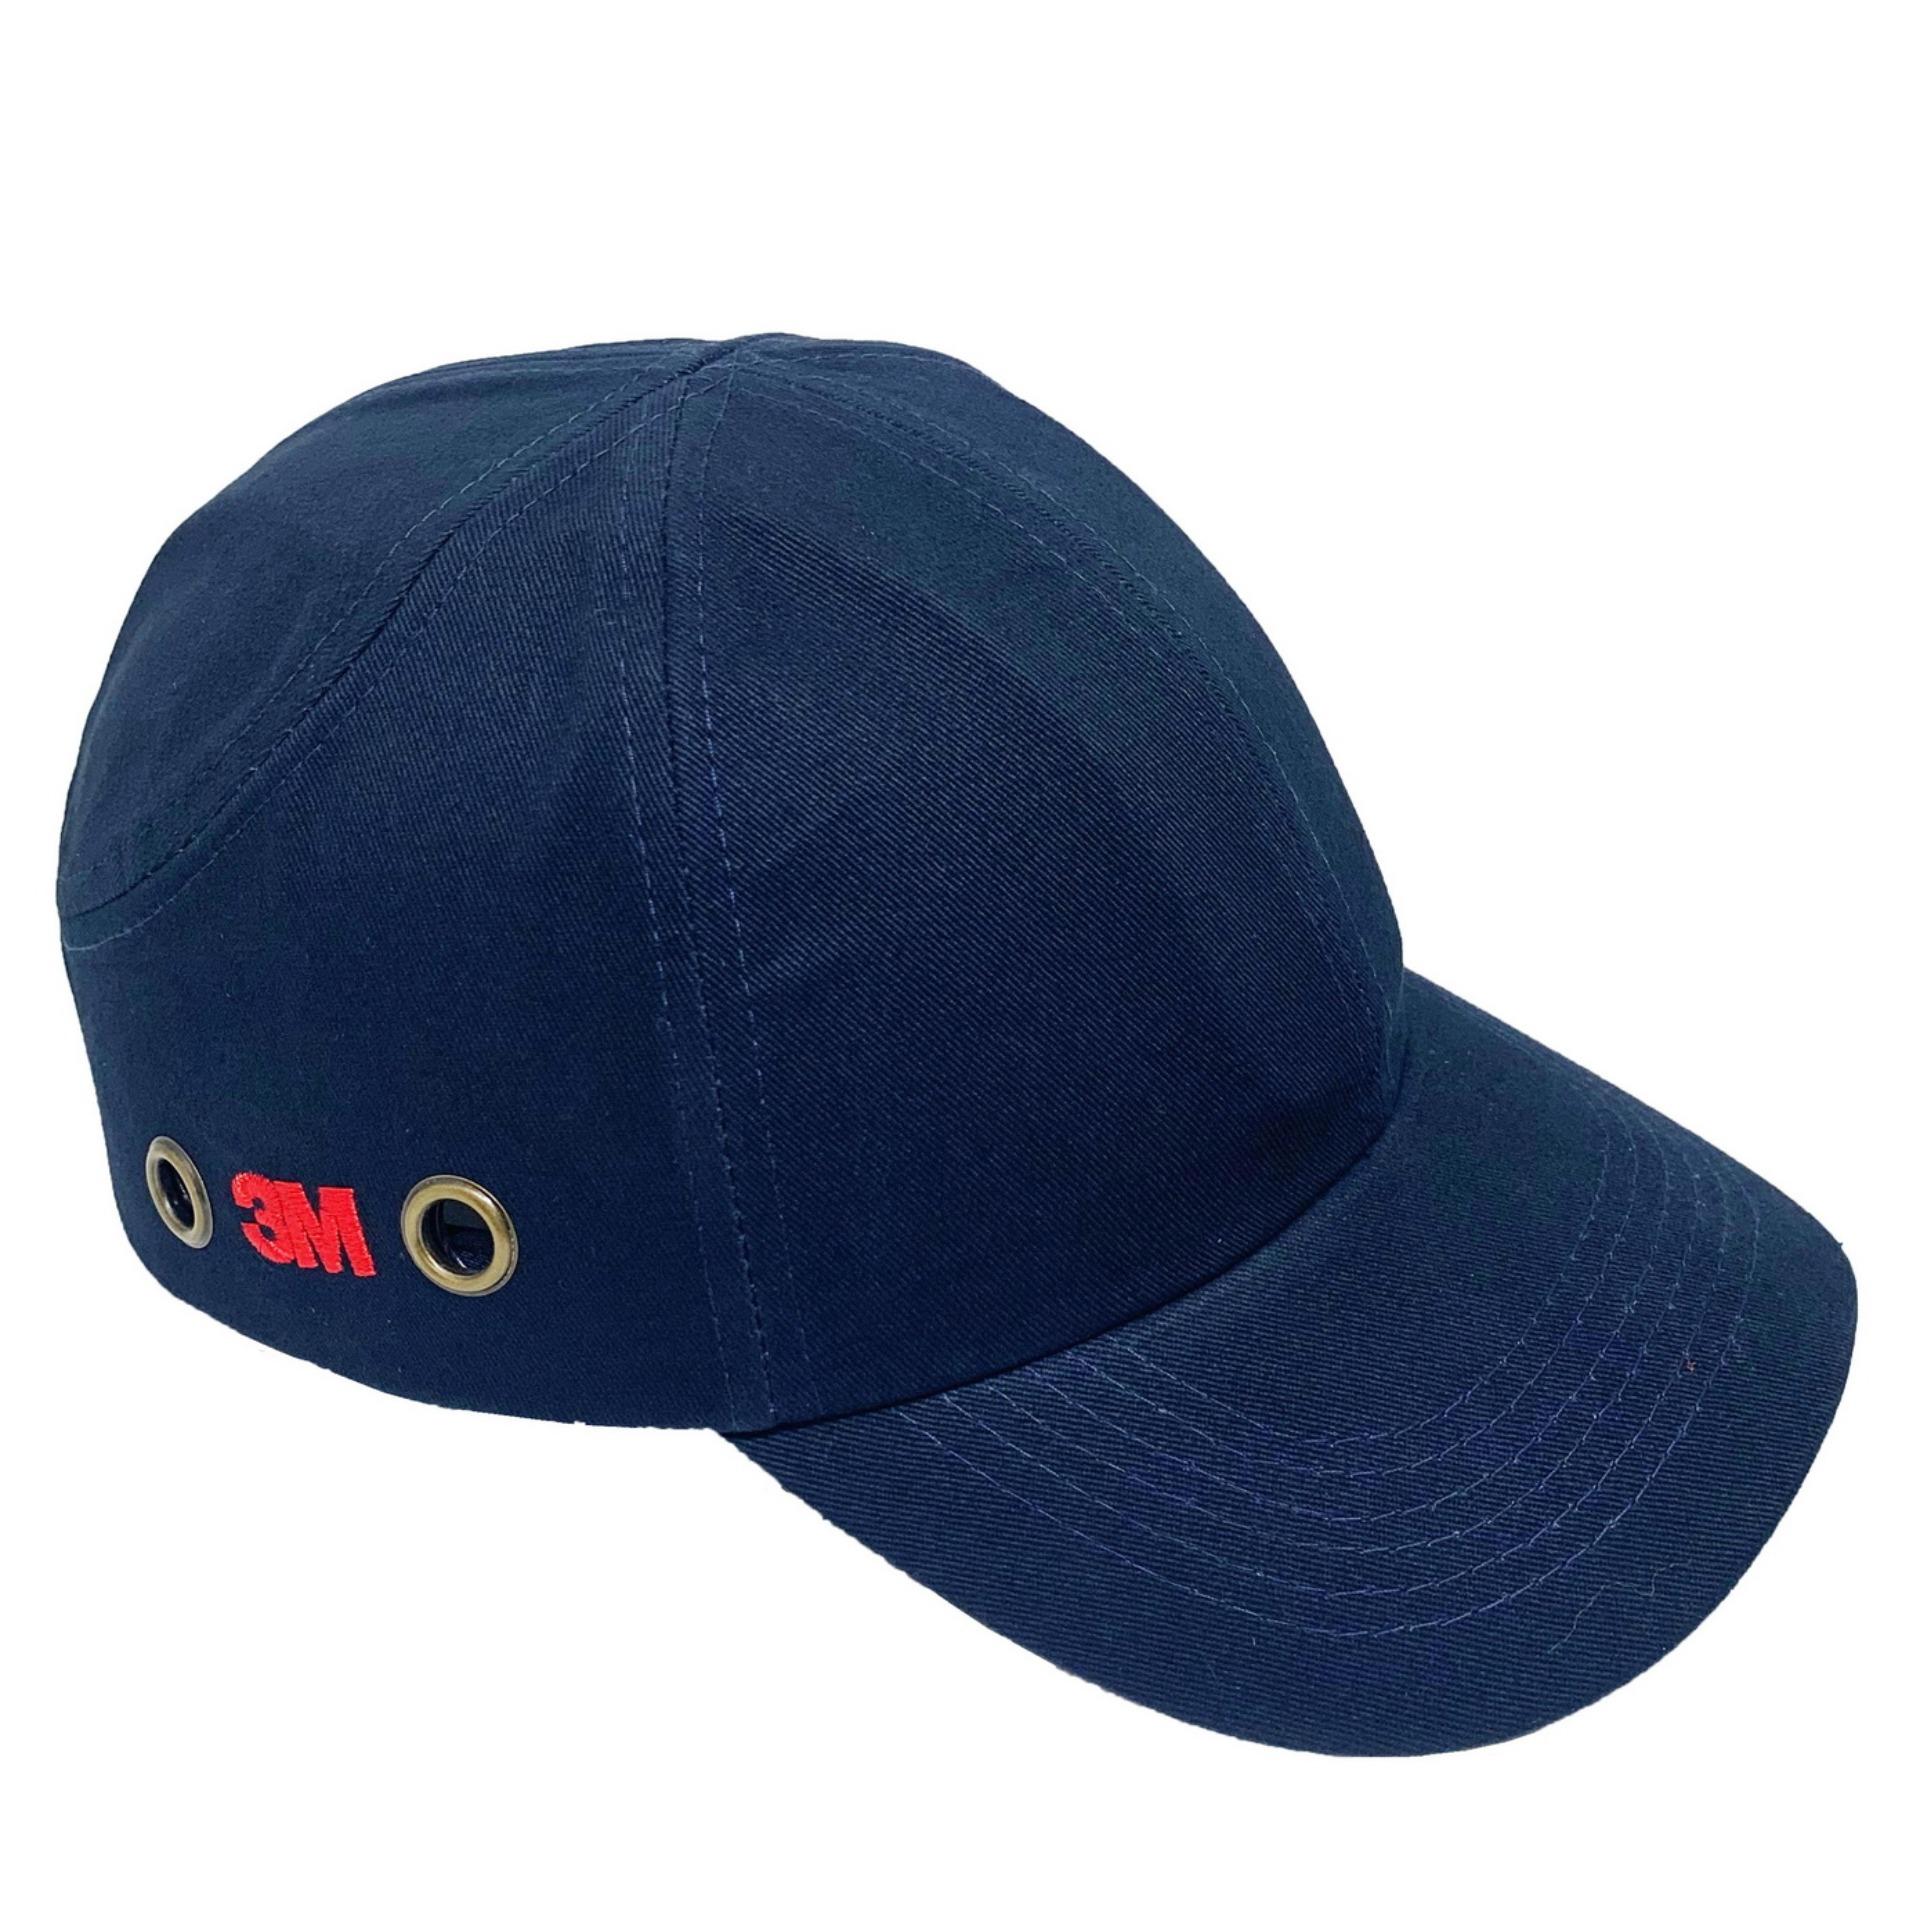 3M Comfort Cap หมวกแค็ป หมวกเสริมโครงนิรภัย EN812 standard สำหรับงานซ่อมบำรุงต่างๆ งานบรรจุสินค้า และงานขนส่ง